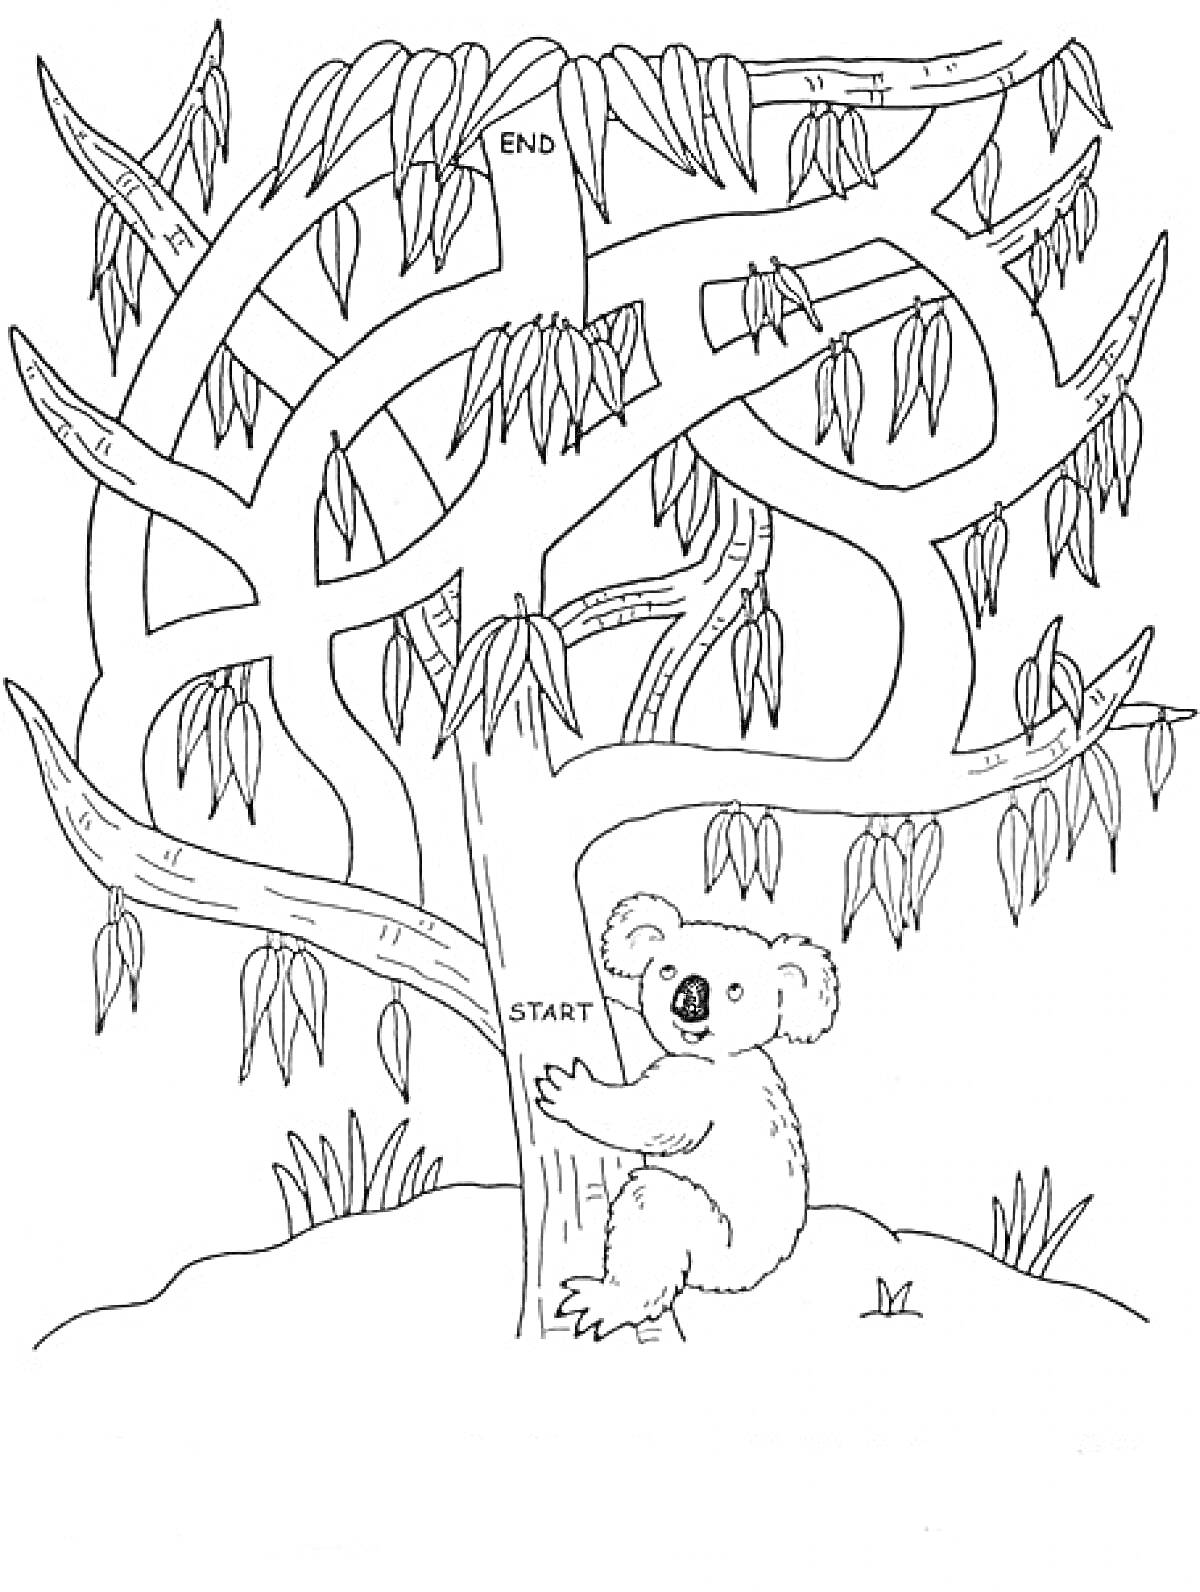 Лабиринт на дереве с коалой